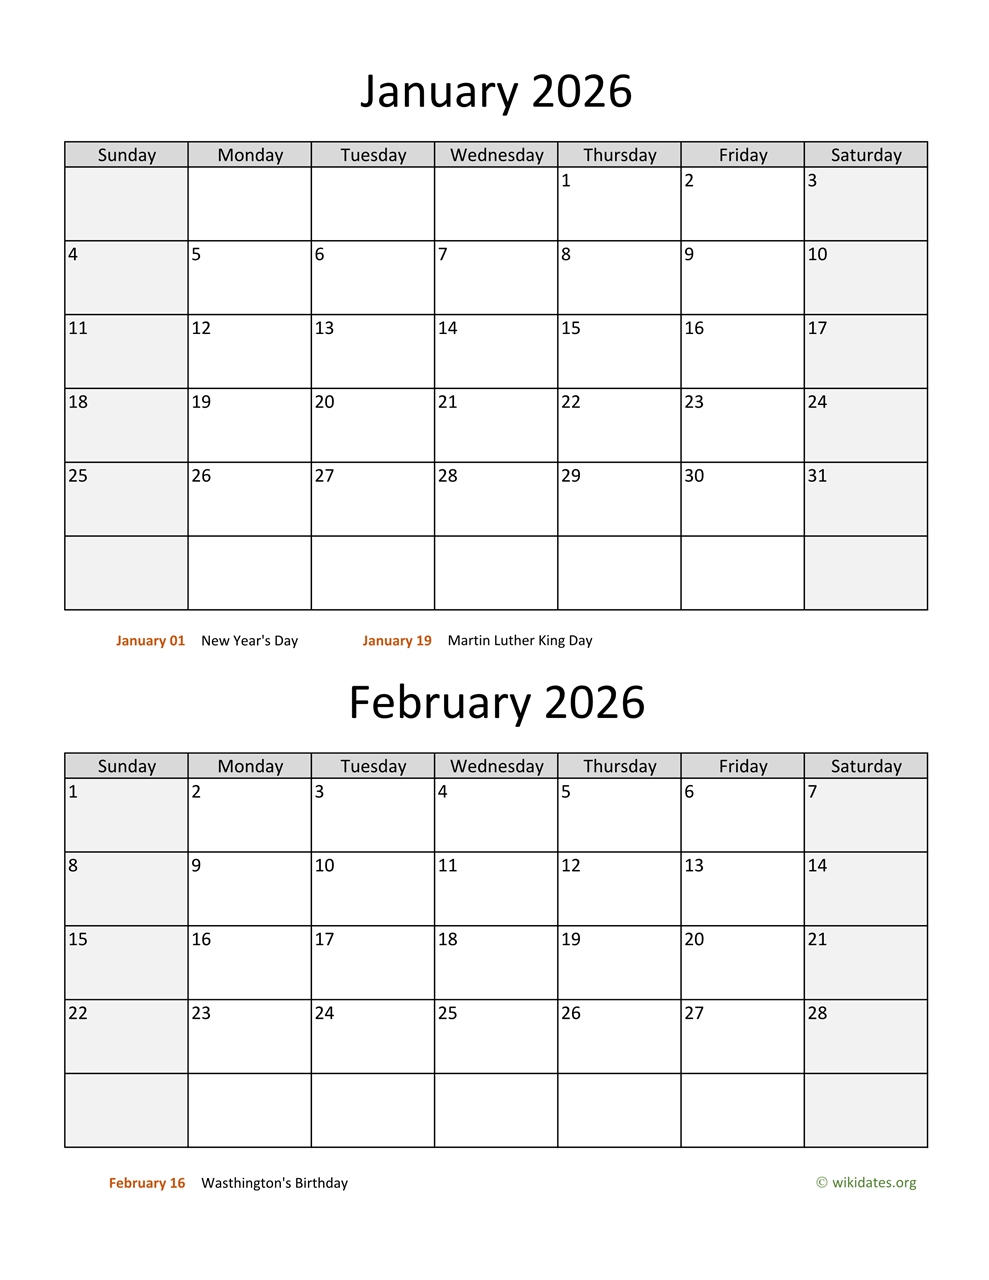 January and February 2026 Calendar WikiDates org